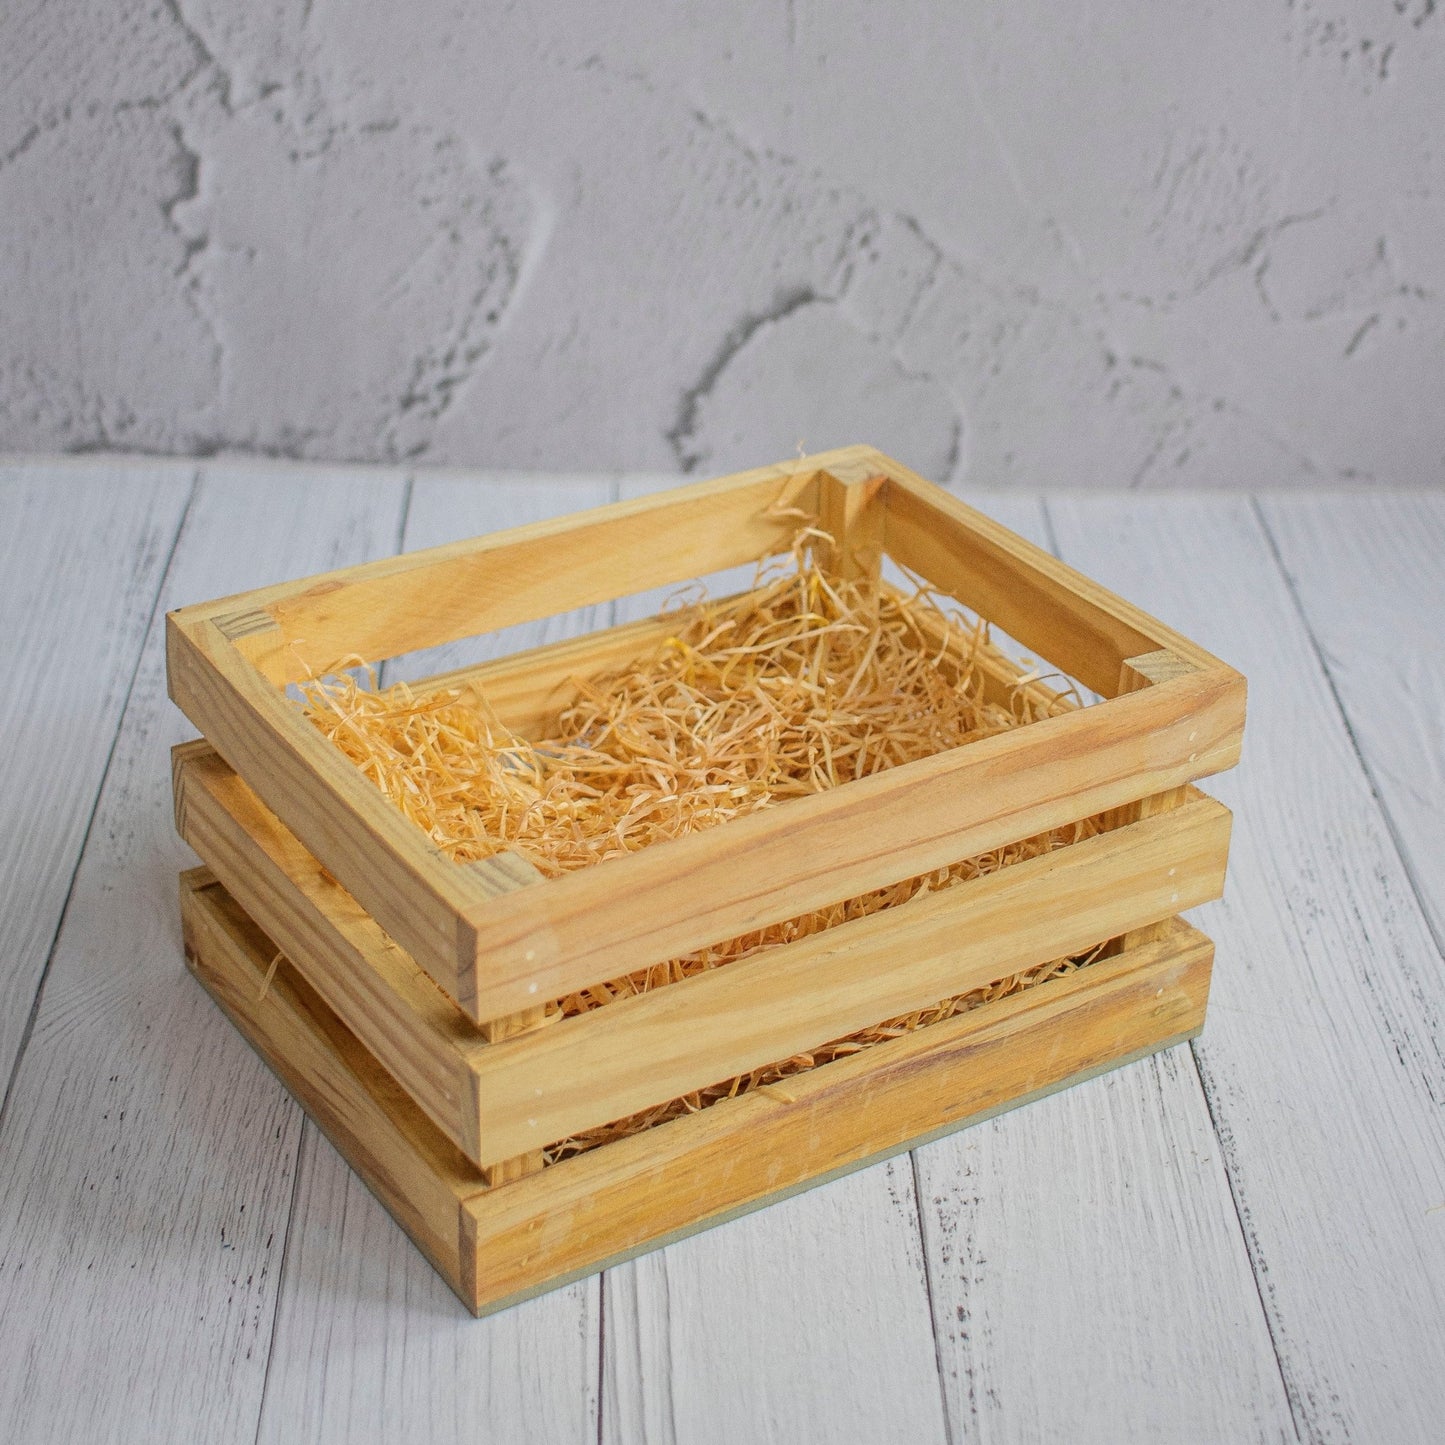 Wooden Mini Crates : Pinewood Crates for Gifting - Ebony WoodcraftsGifting Baskets